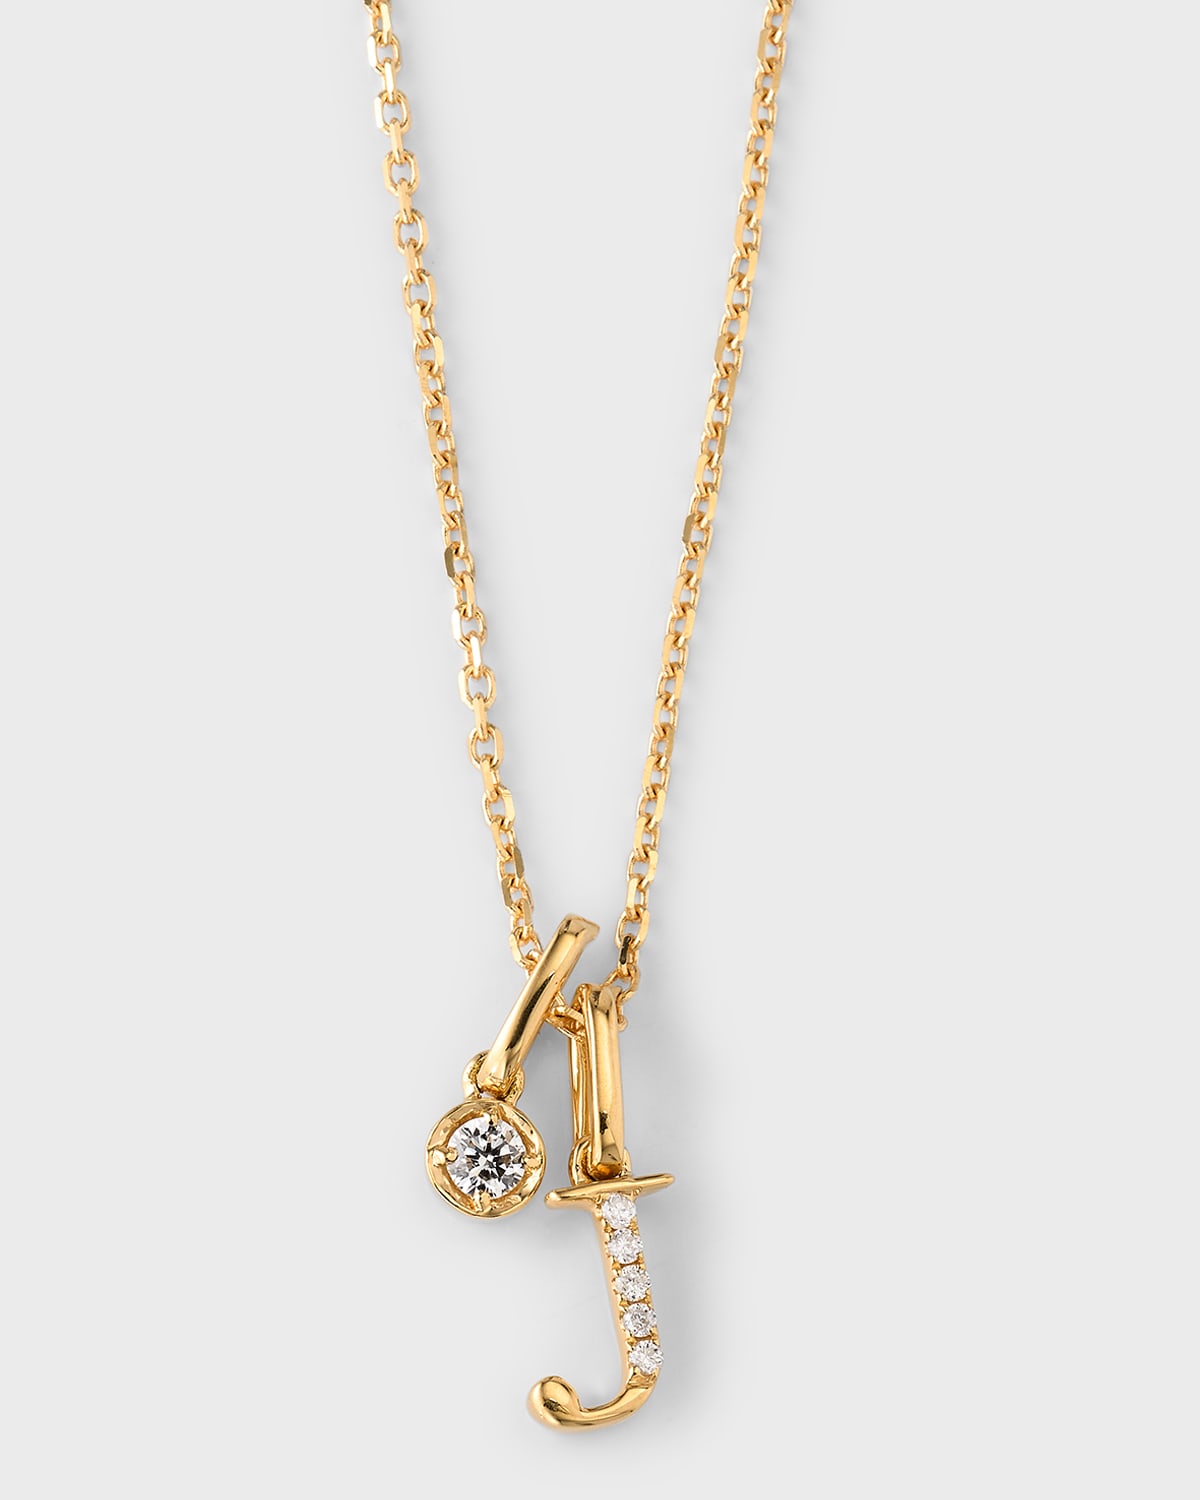 Frederic Sage 18k Yellow Gold Diamond Initial Pendant Necklace, J